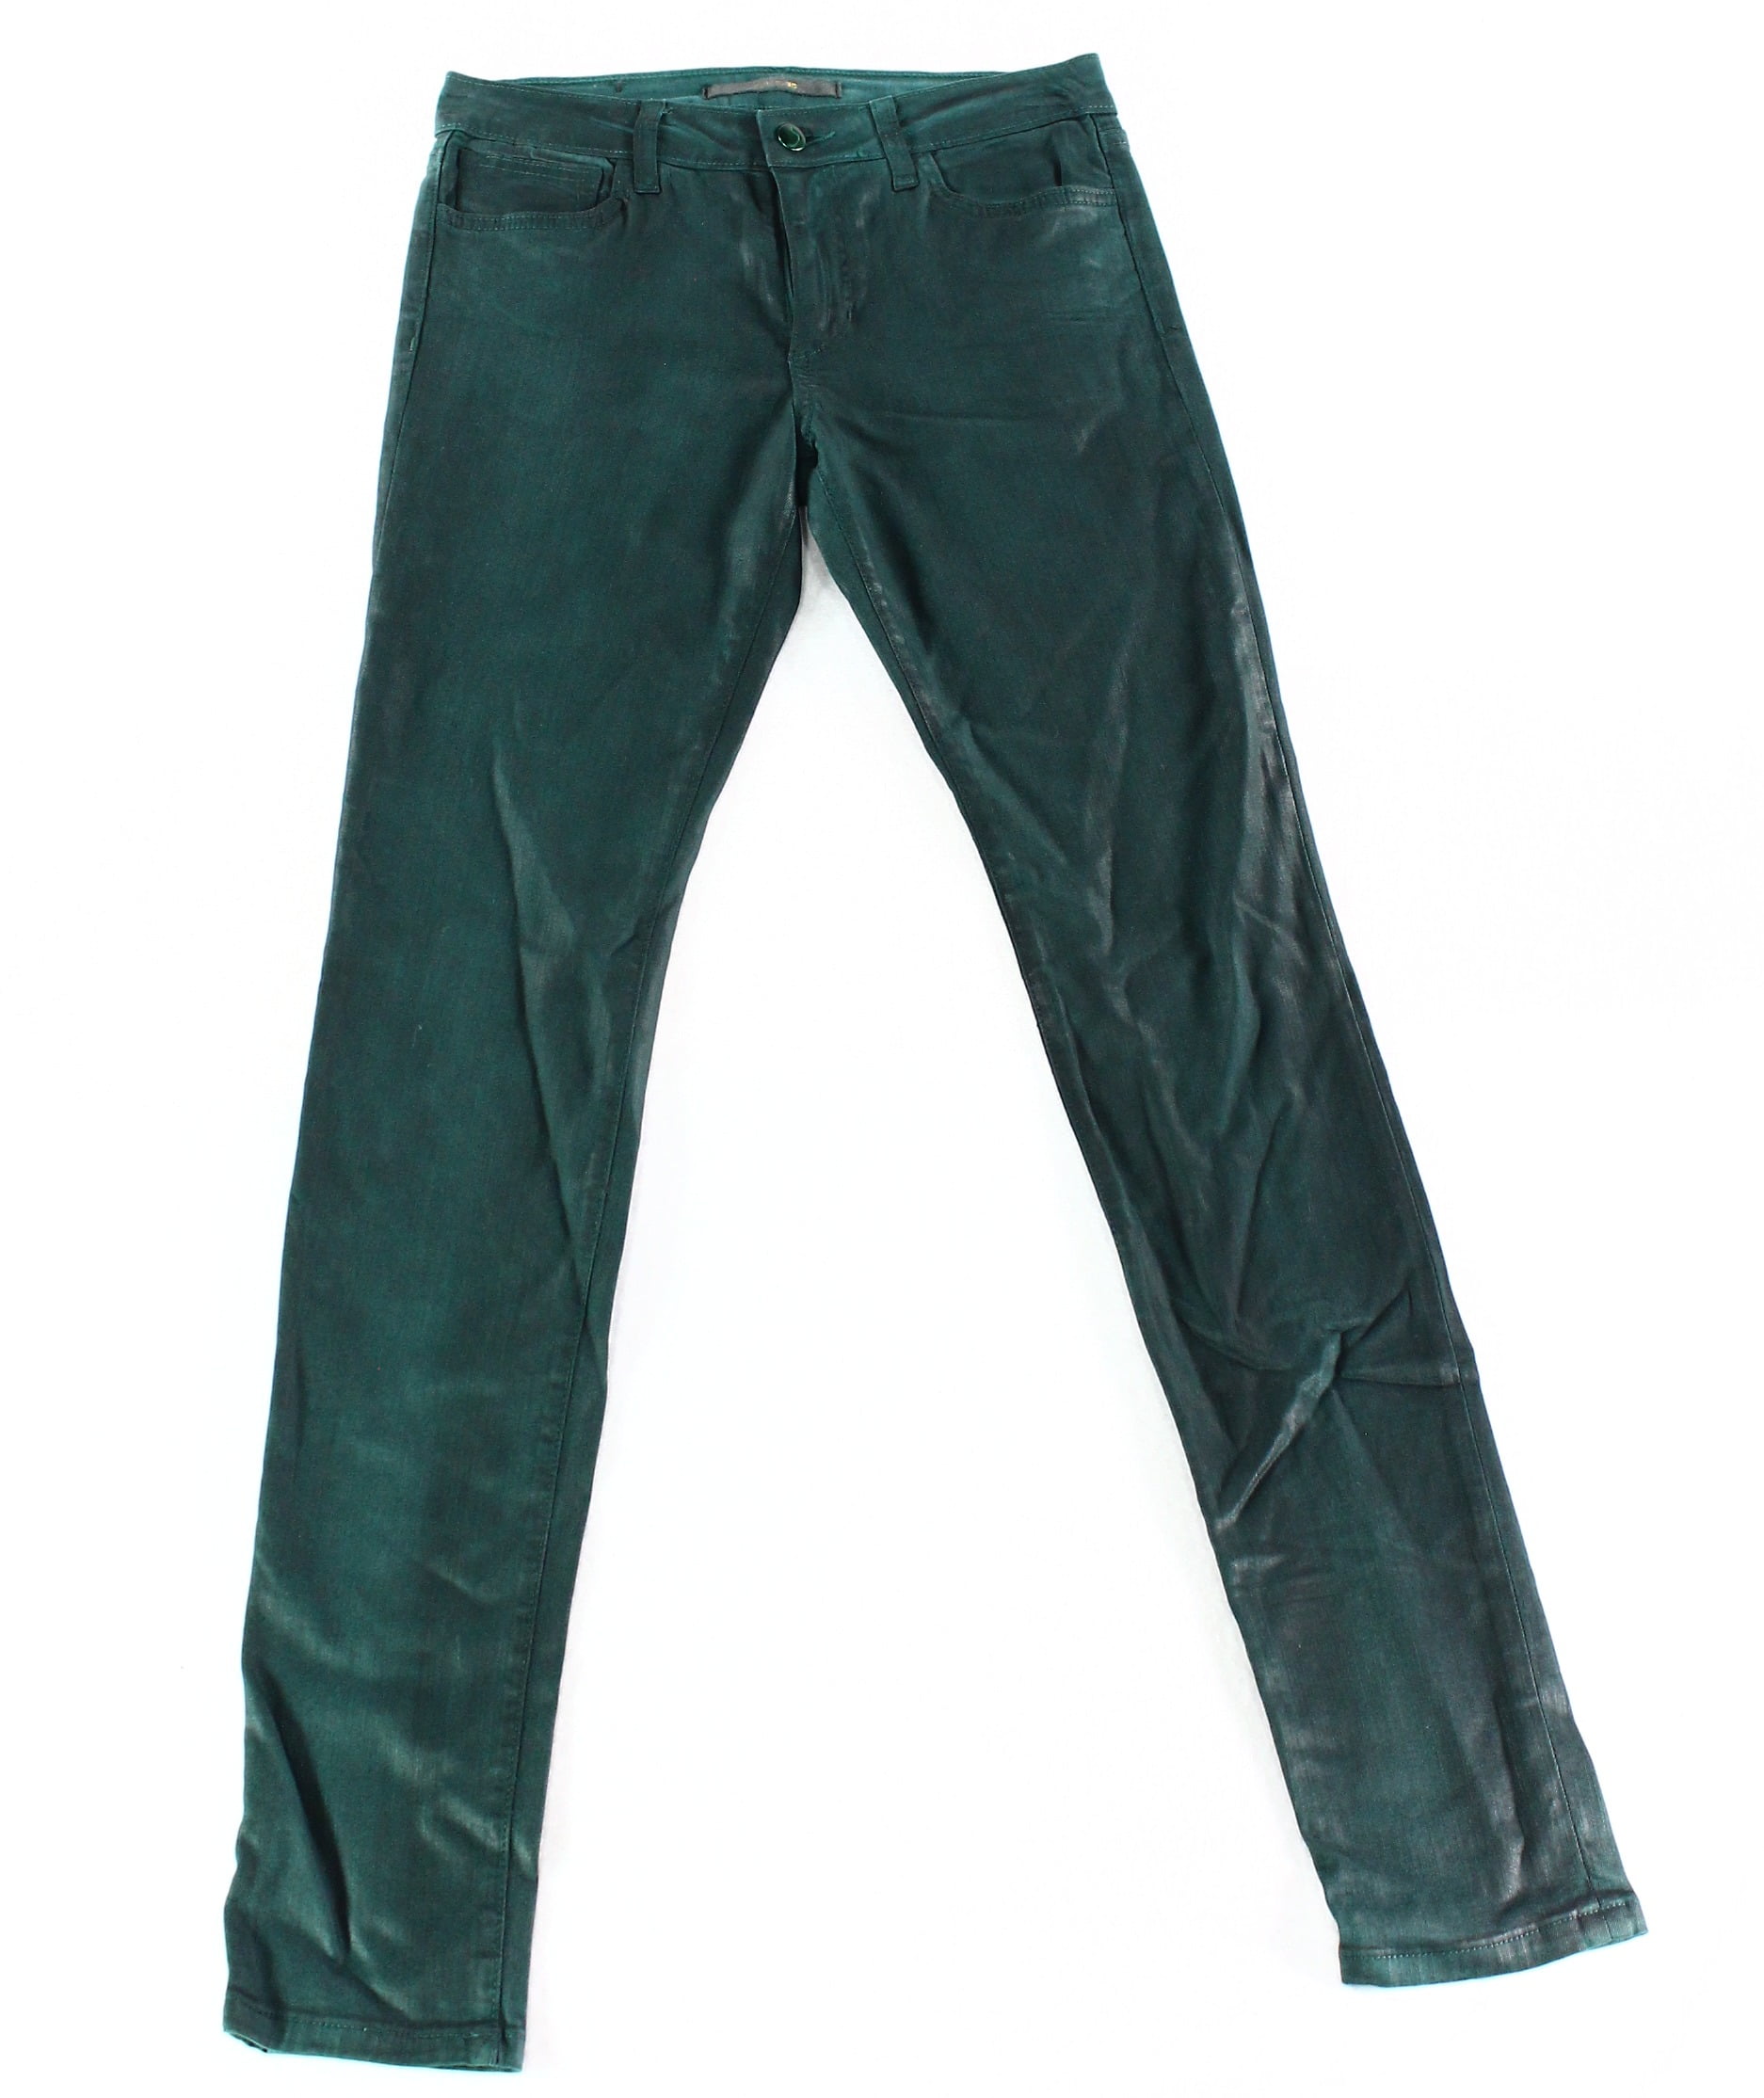 emerald green skinny jeans womens